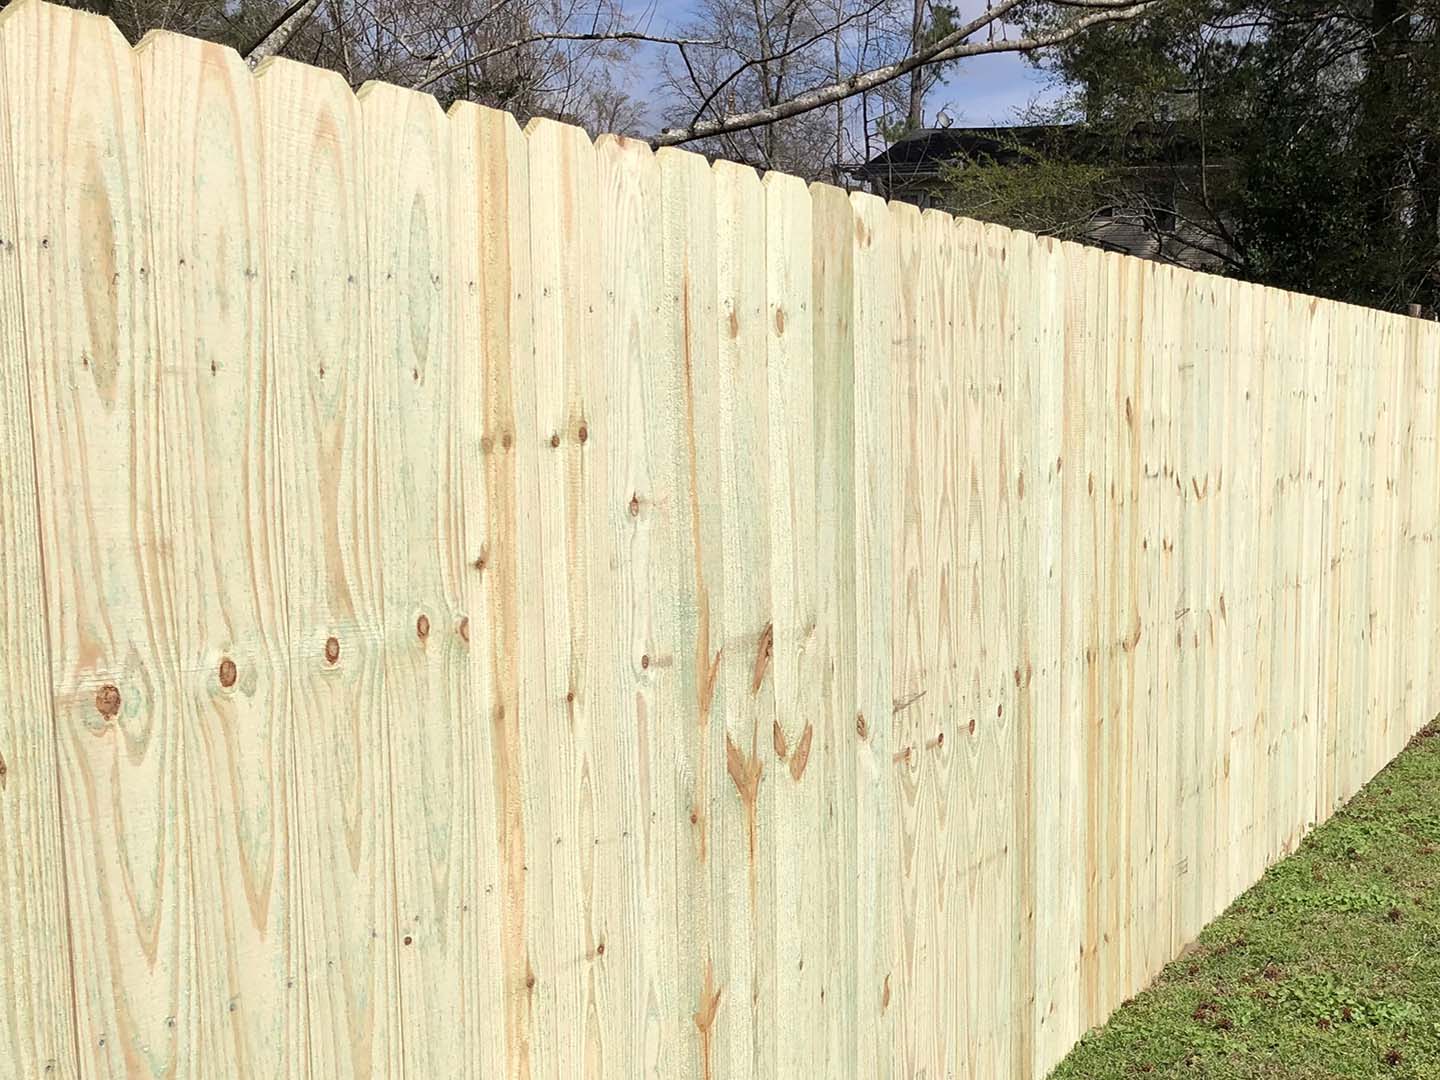 Vestavia Al stockade style wood fence